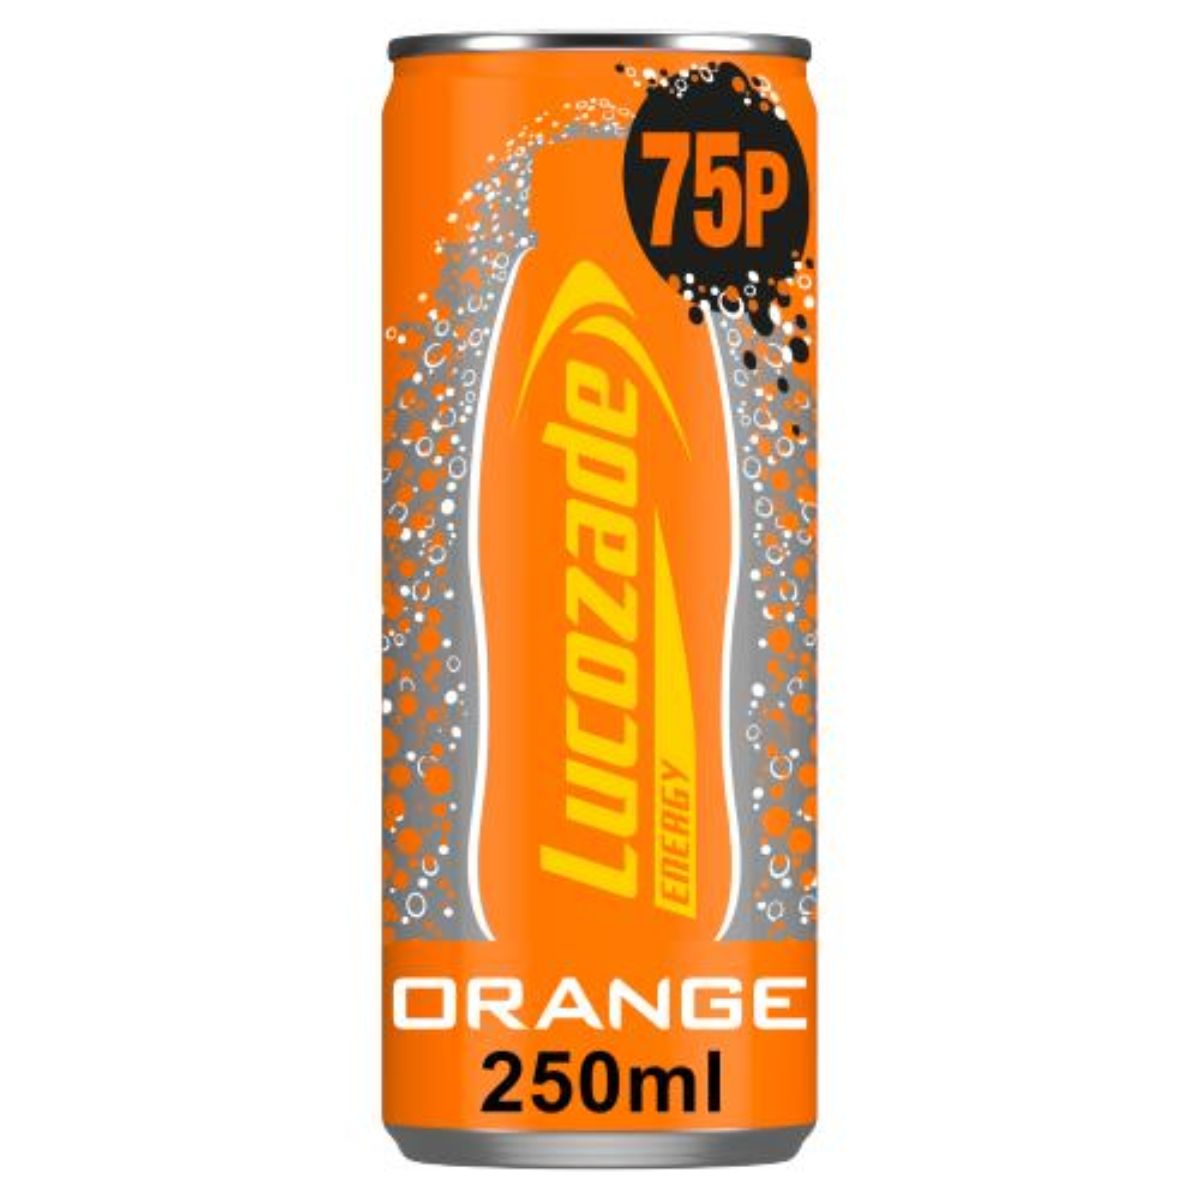 Lucozade - Energy Drink Orange - 250ml can.